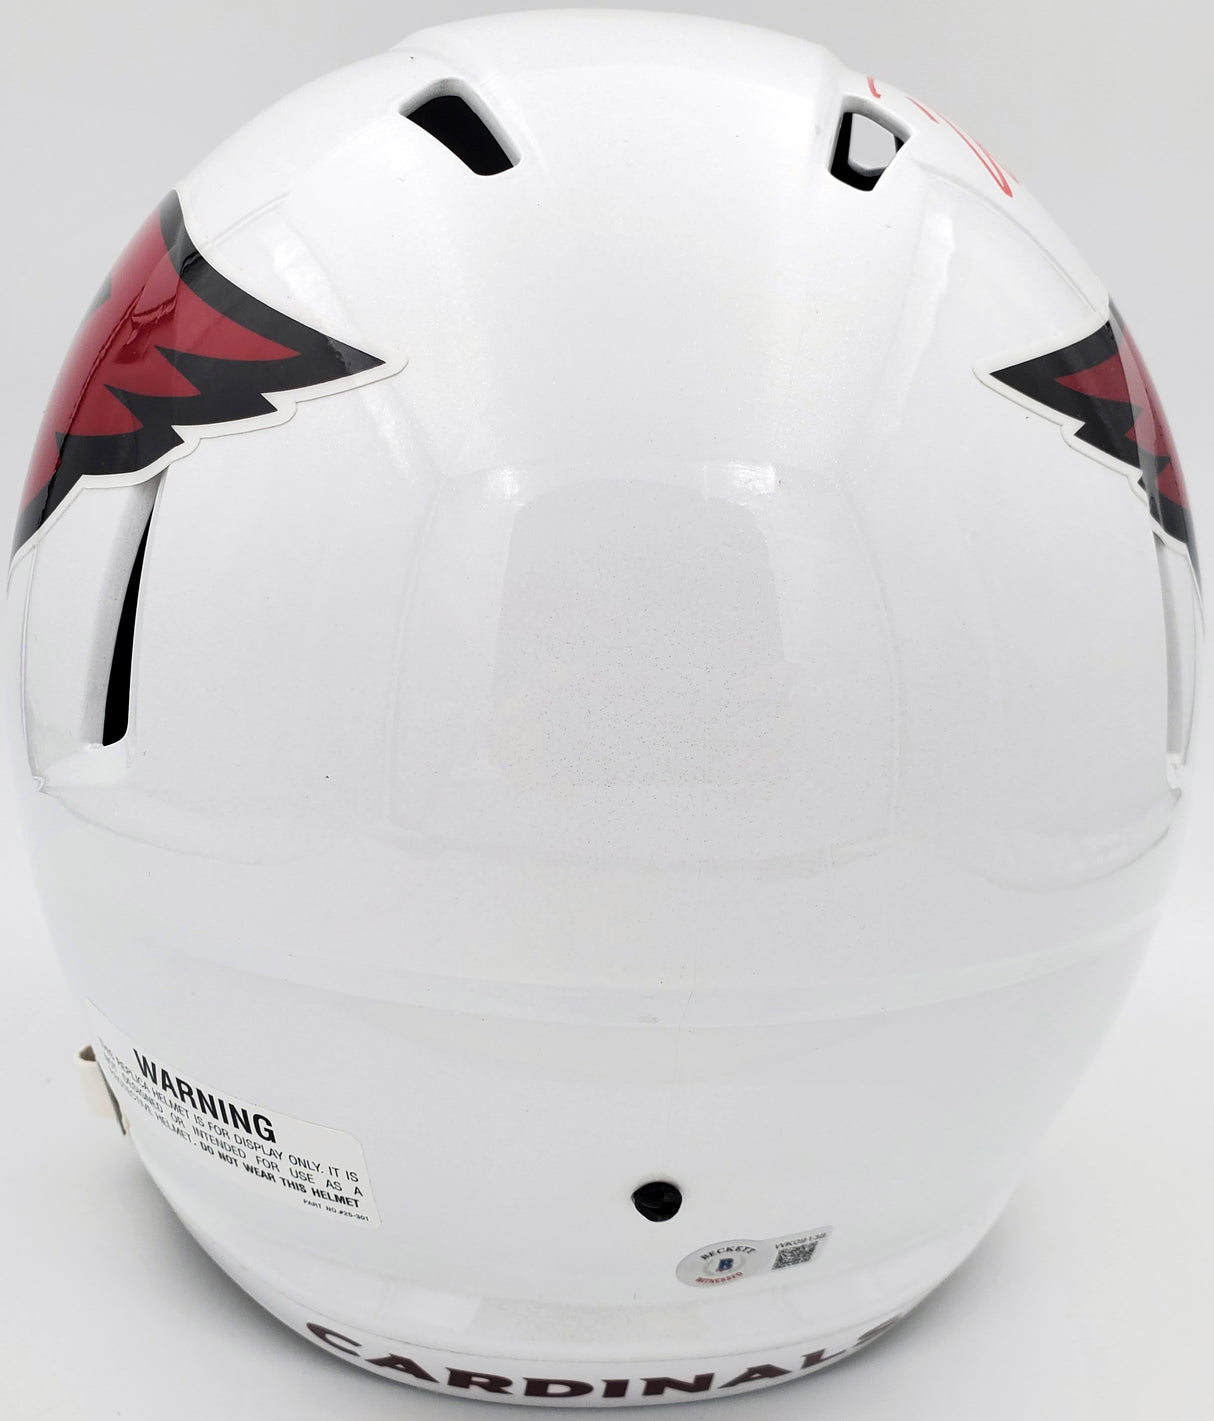 DeAndre Hopkins Autographed Arizona Cardinals White Full Size Replica Speed Helmet Beckett BAS QR Stock #193894